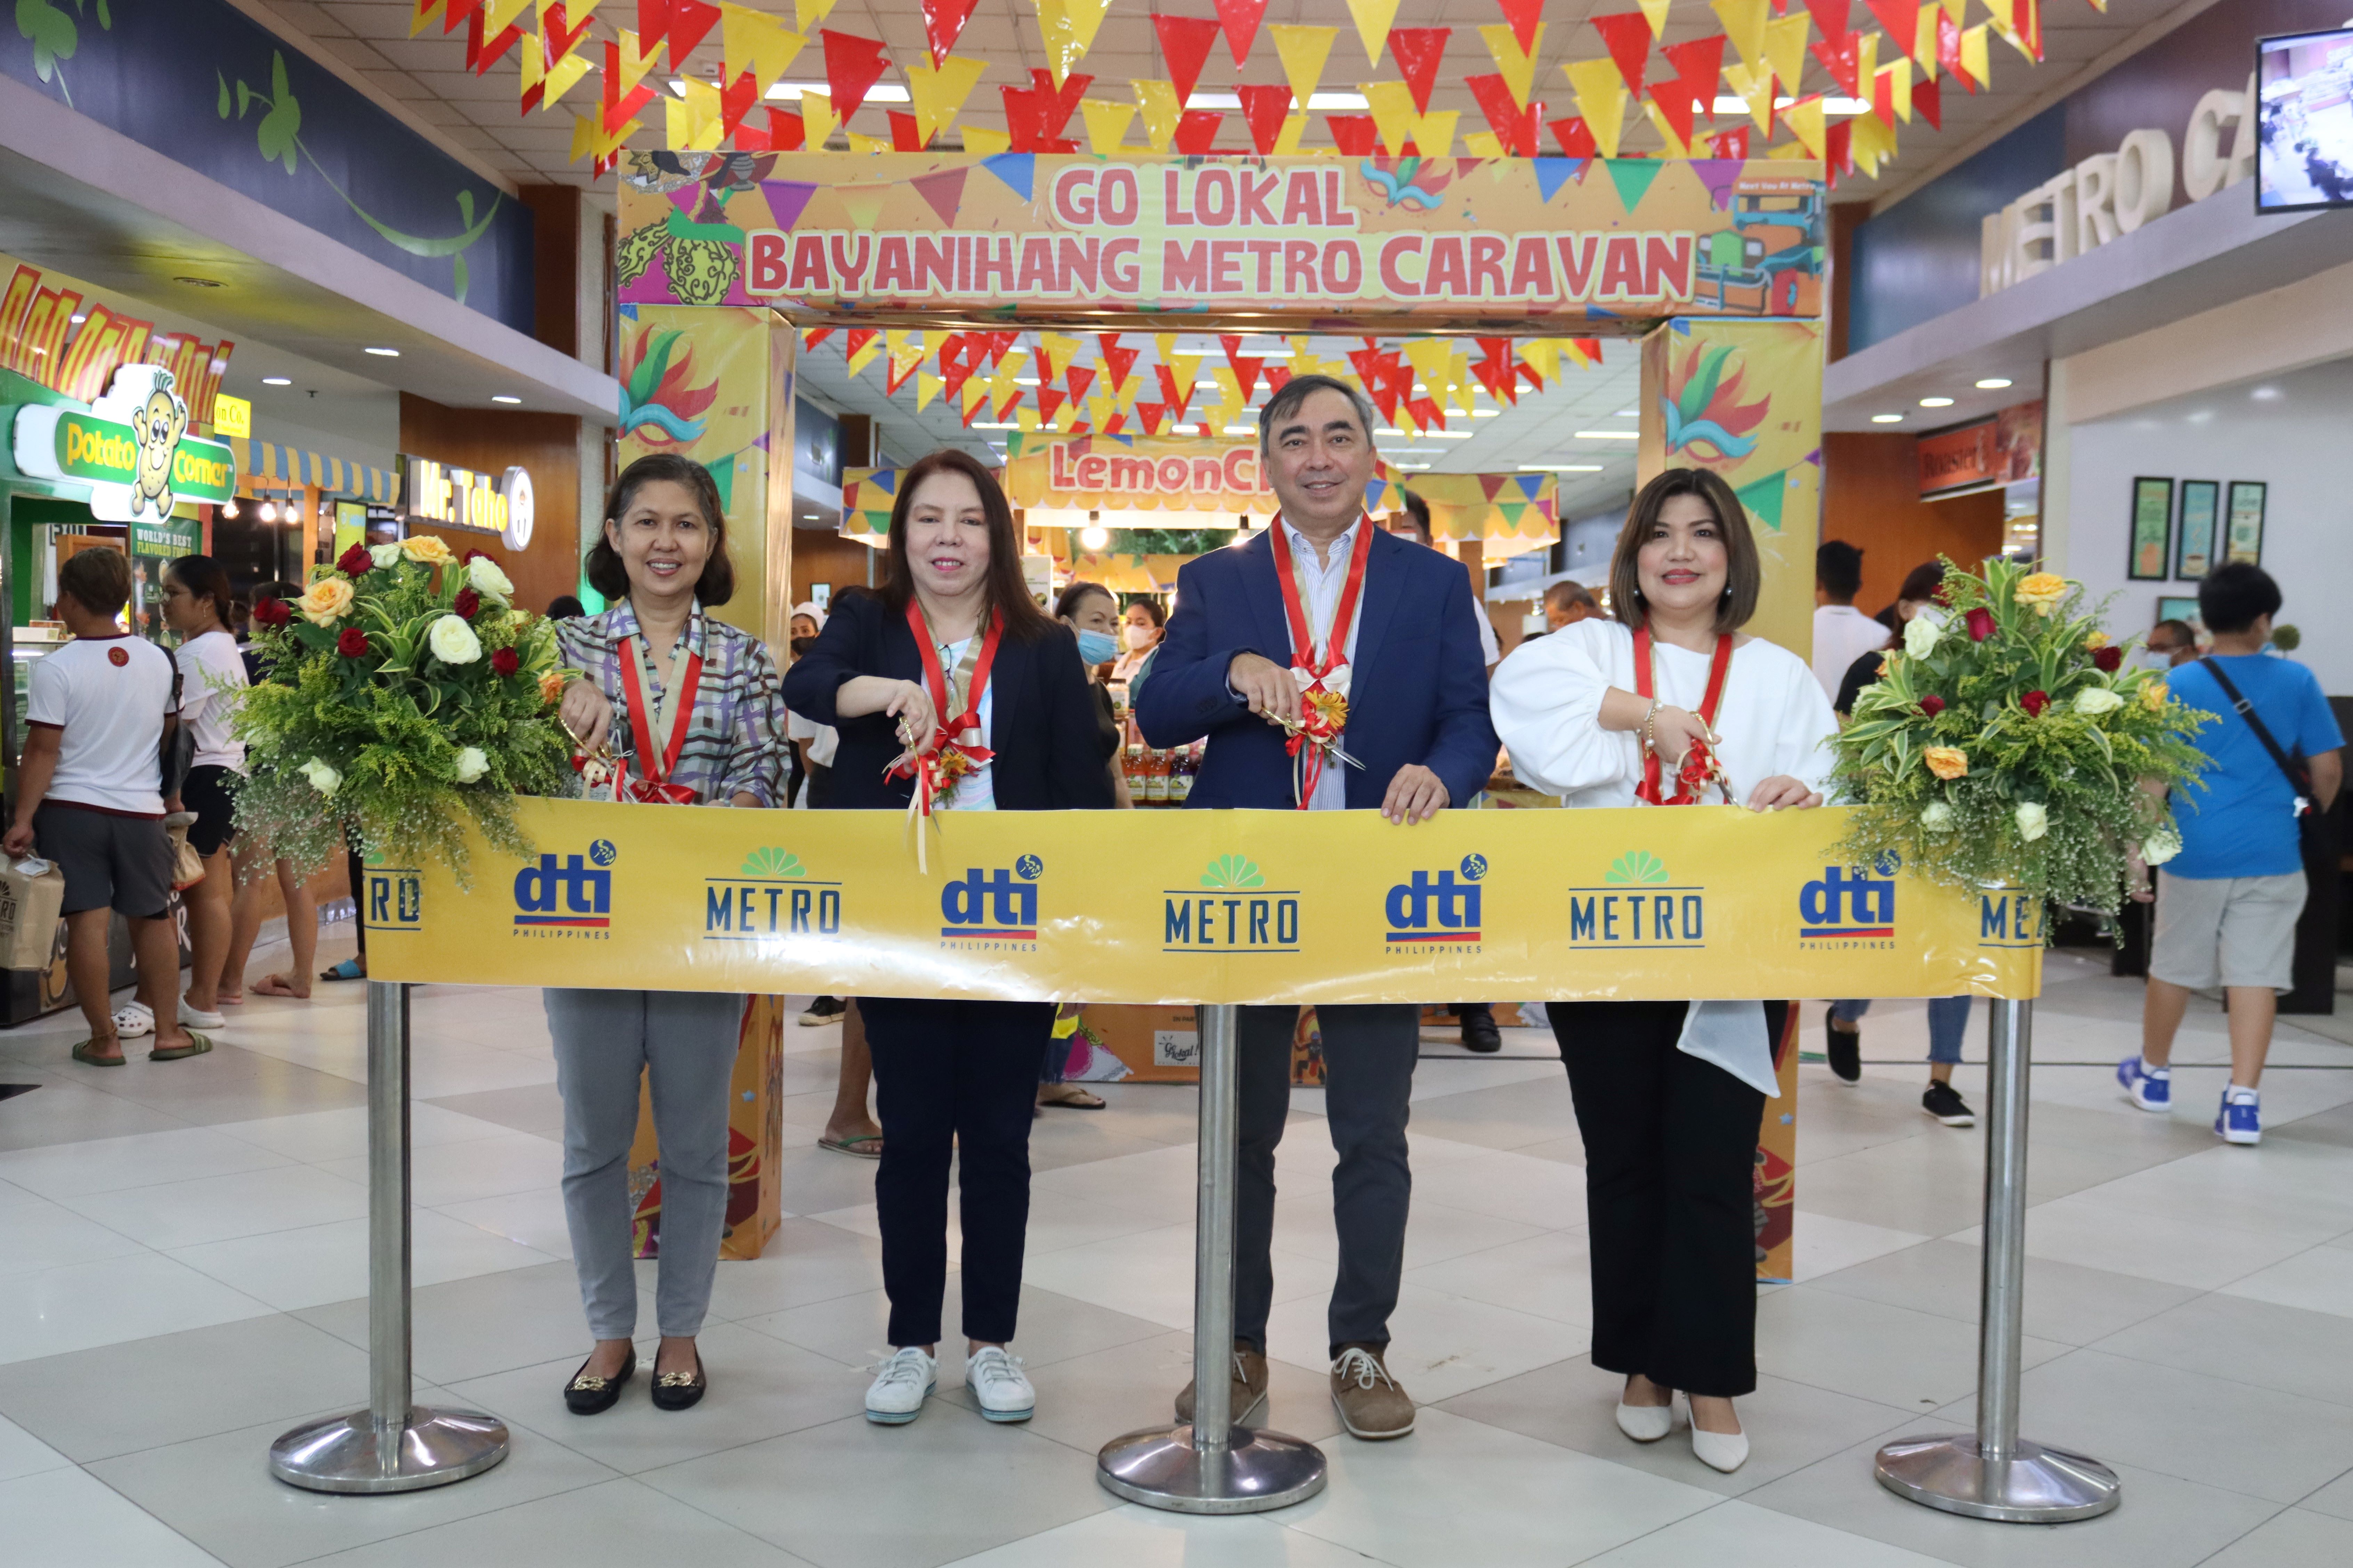 Additional stores for GO LOKAL Bayanihang Metro Caravan